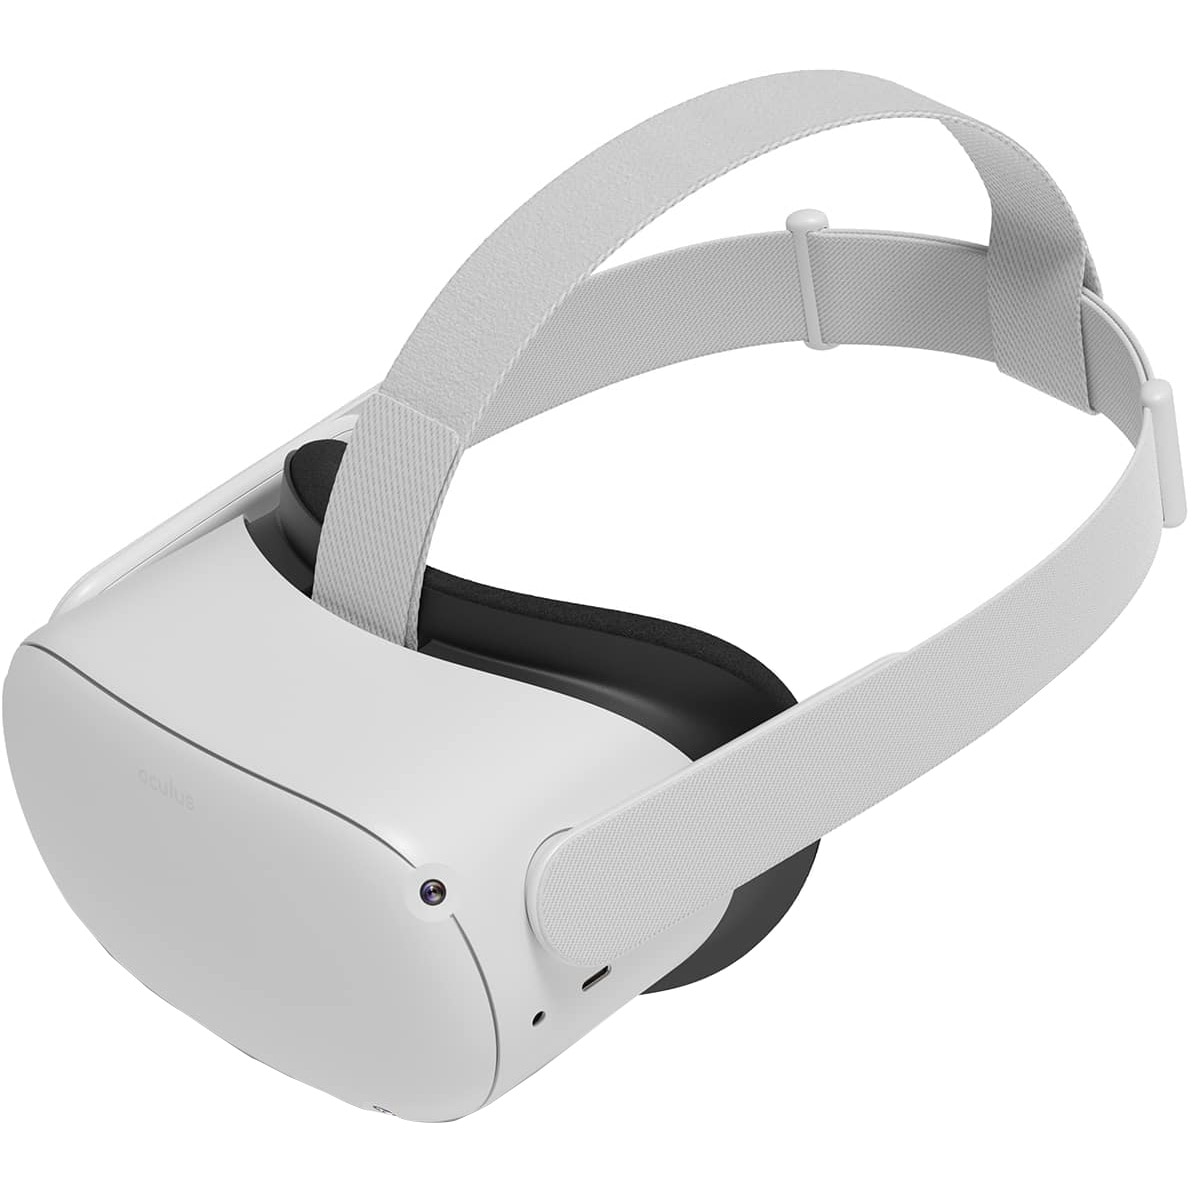 Contradiction Fee sewing machine Ochelari VR META Oculus Quest 2, 128 GB, Alb - eMAG.ro